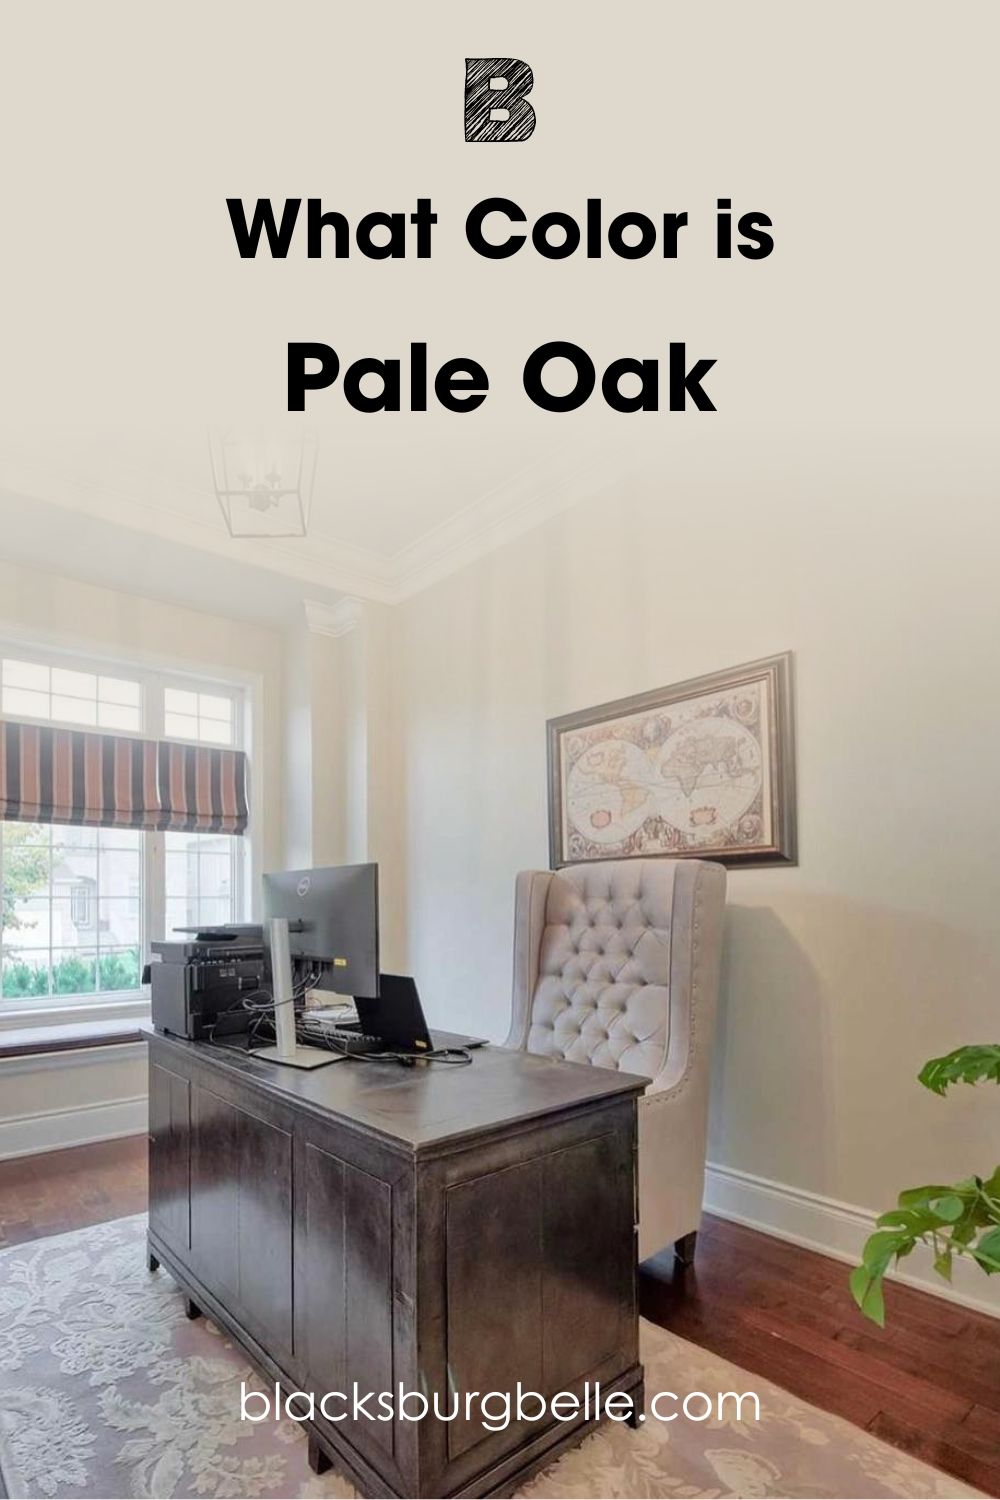 Pale Oak exudes brilliance in this modern living room